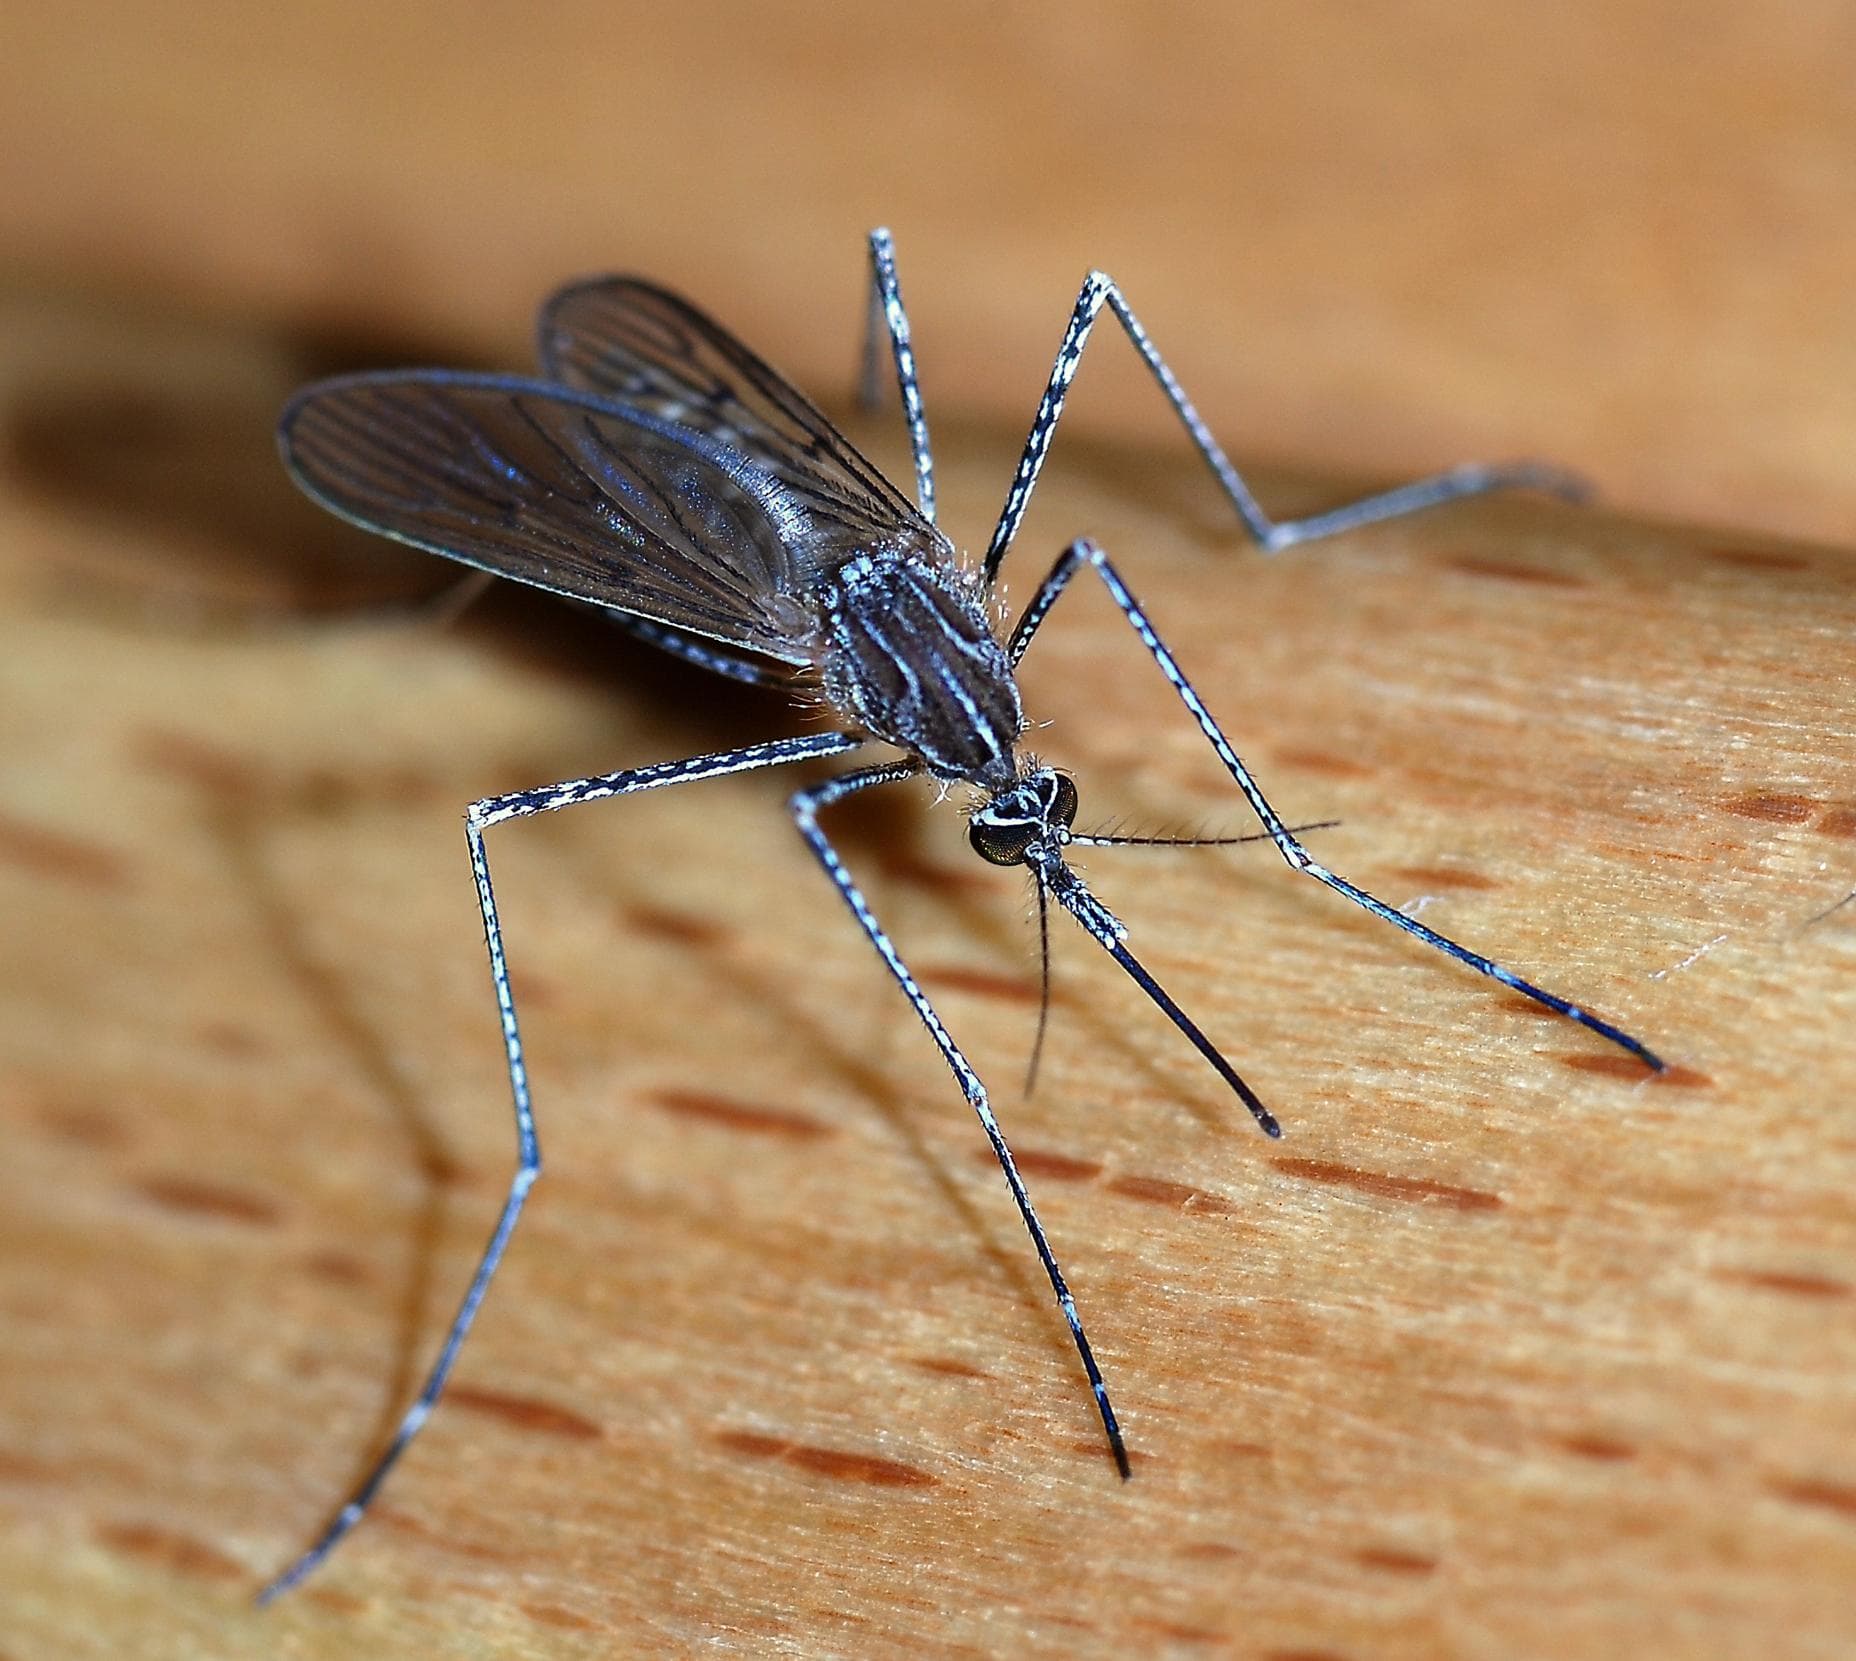 A female mosquito. (Image credit Alvesgaspar/Creative Commons)